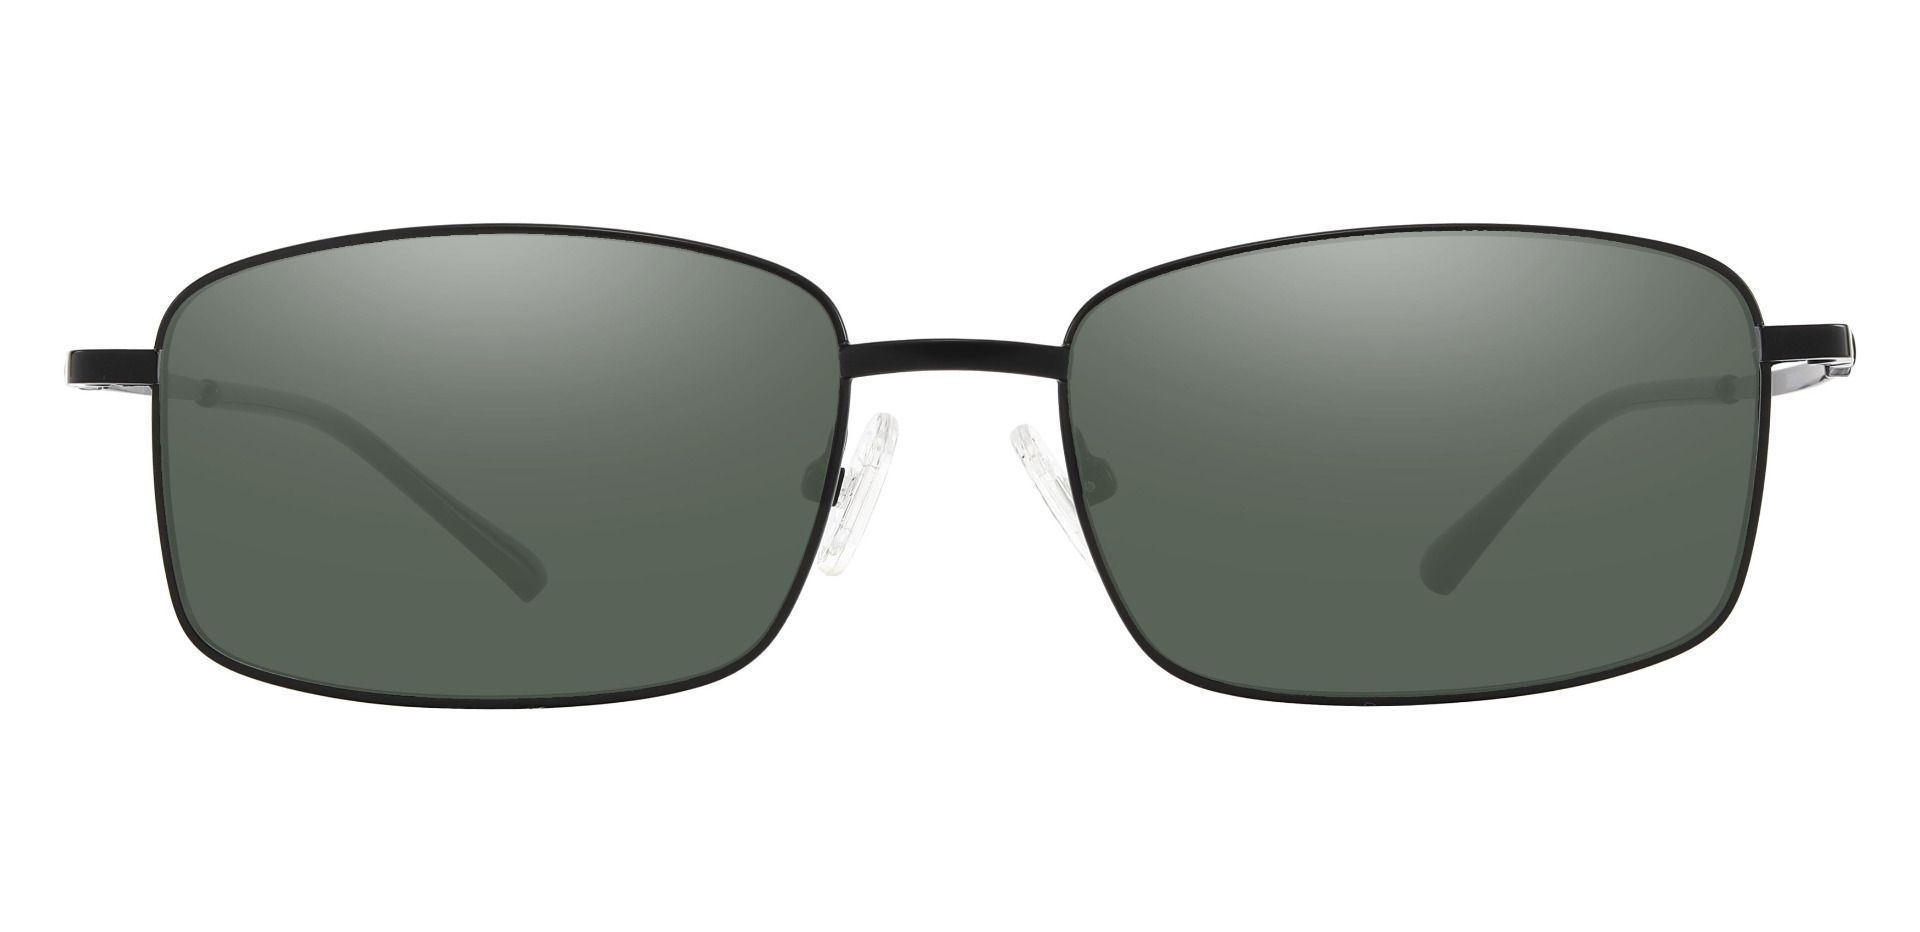 Clyde Rectangle Prescription Sunglasses - Black Frame With Green Lenses